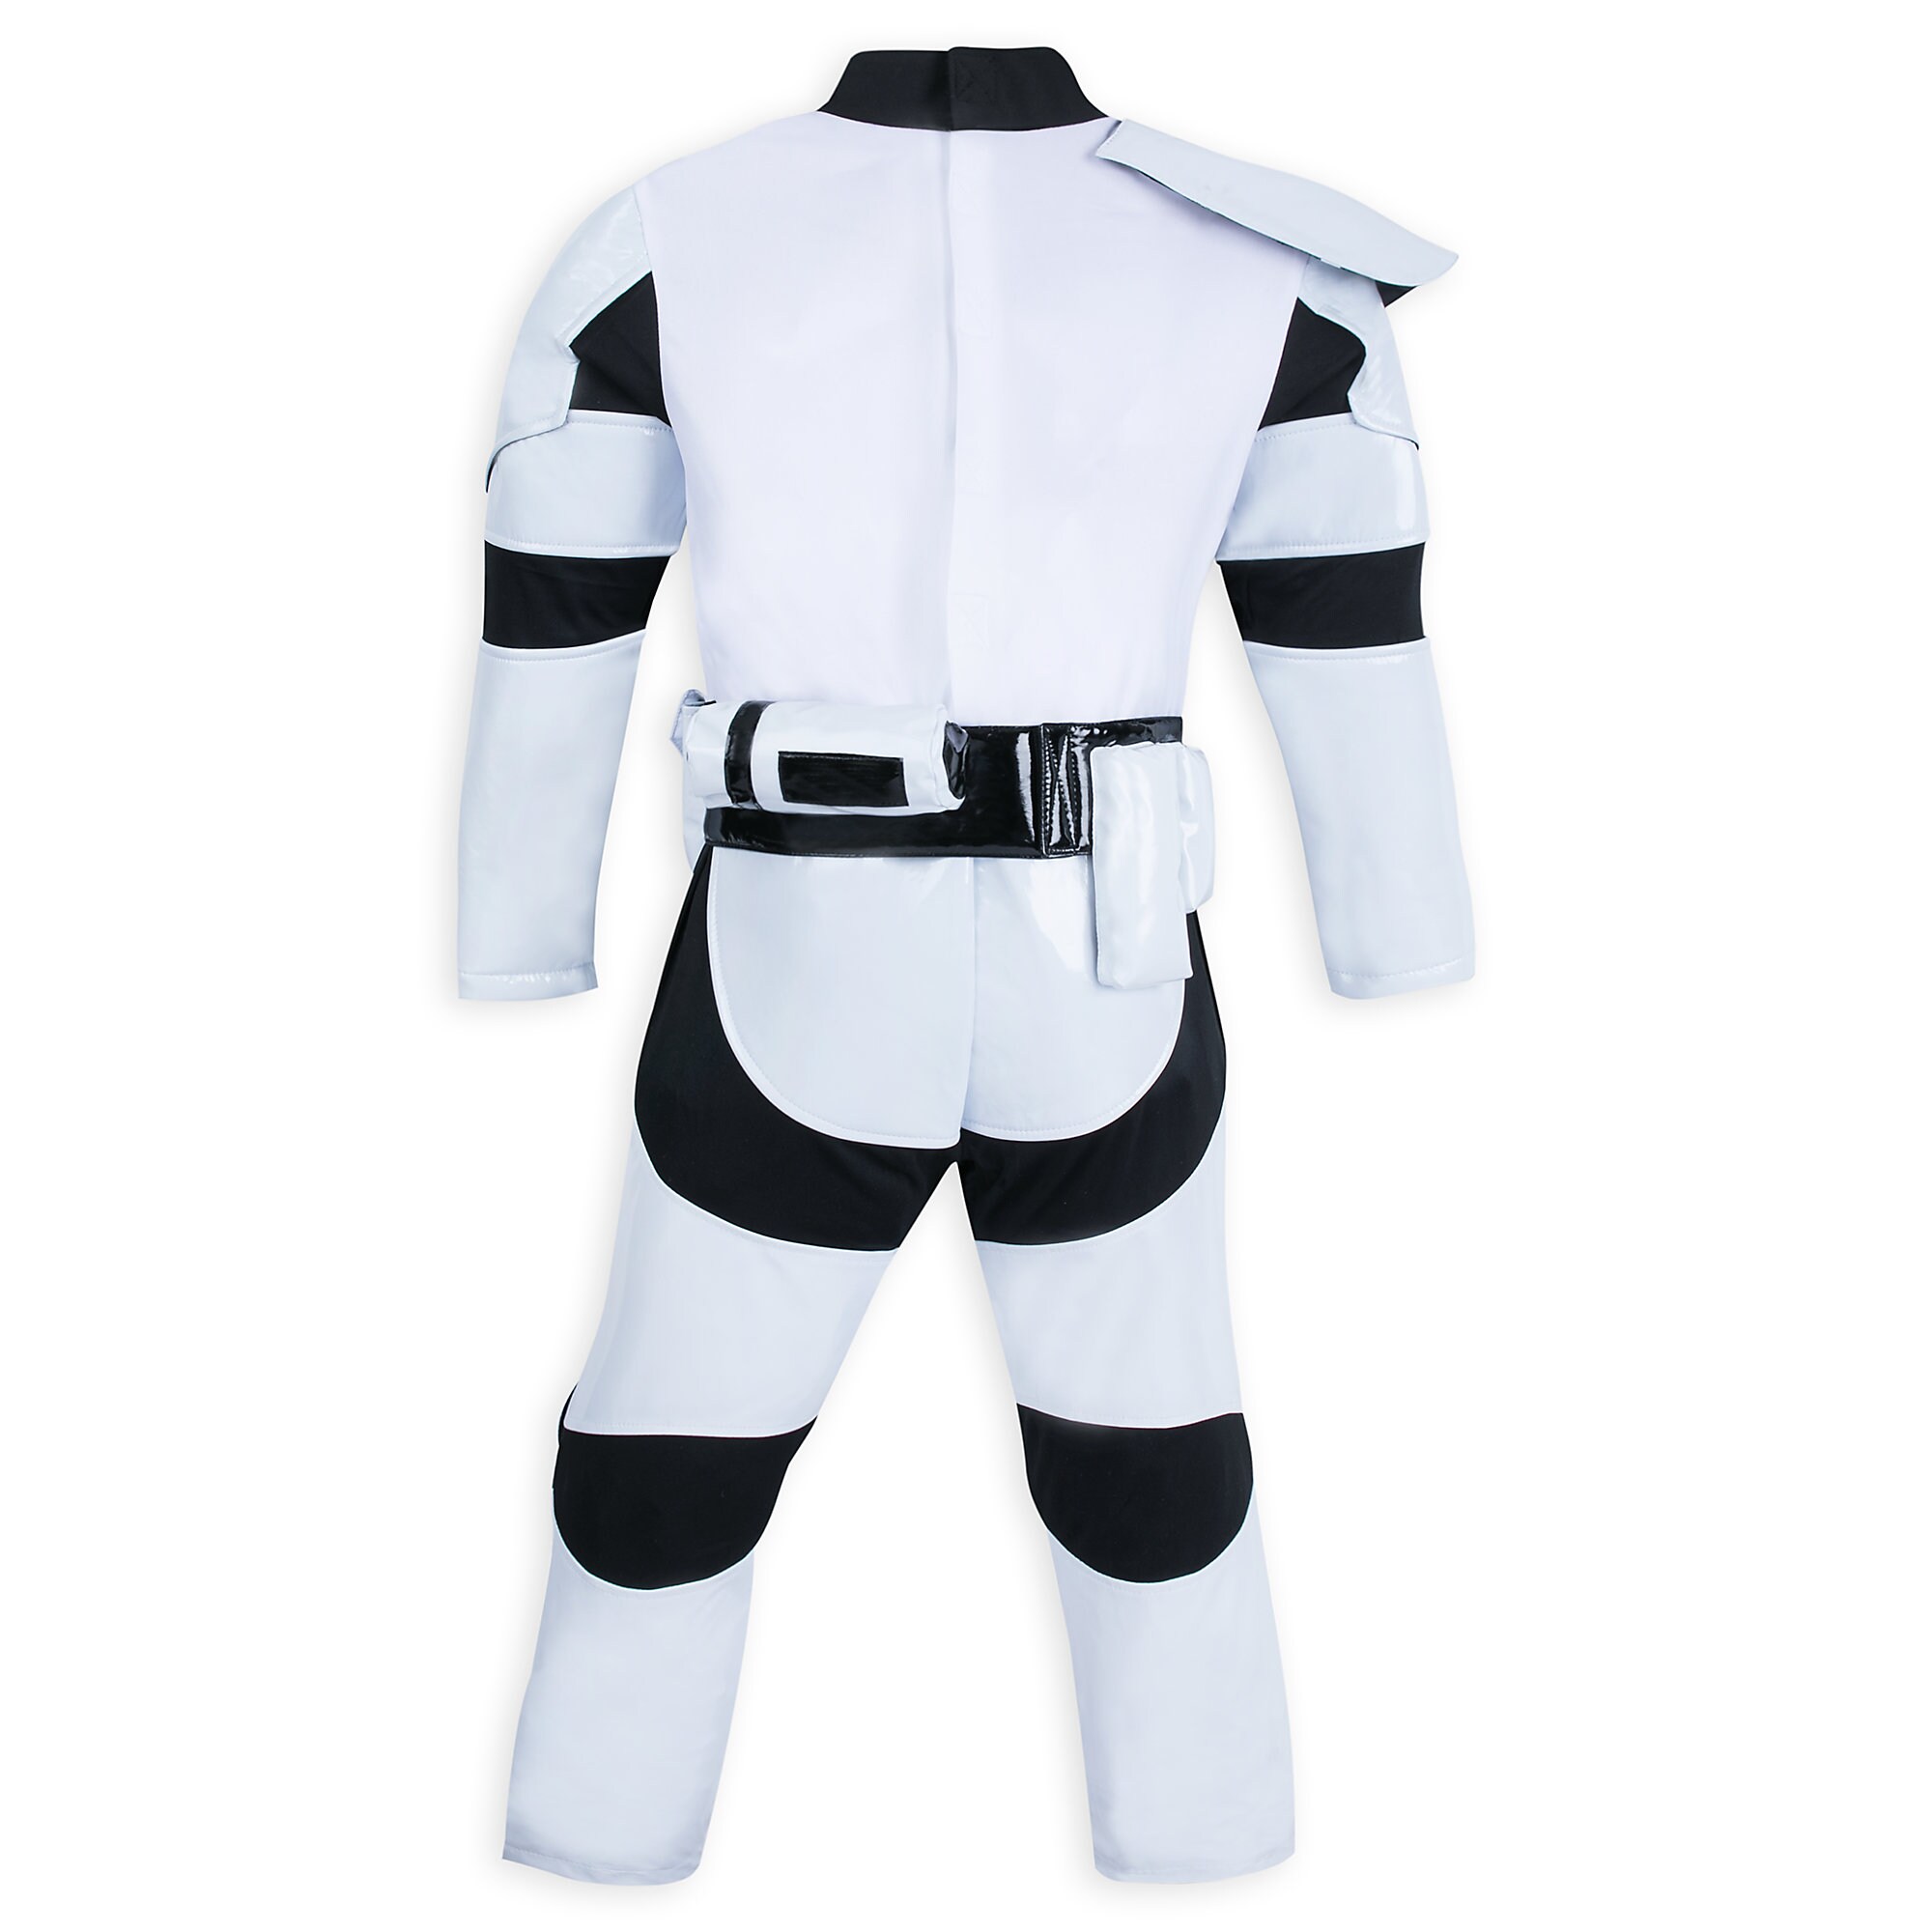 Stormtrooper Costume for Kids - Star Wars